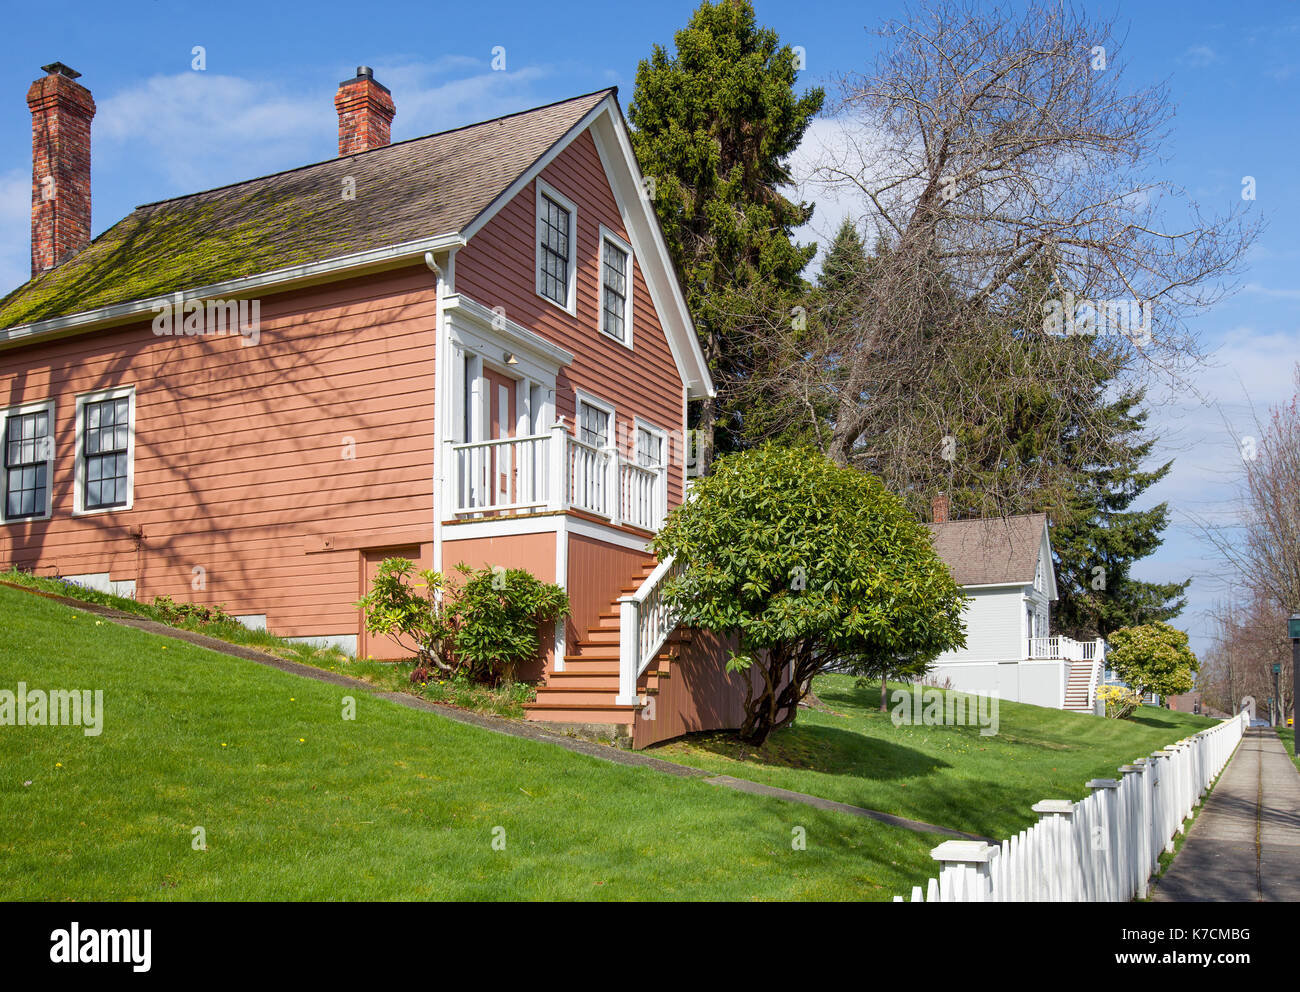 American bungalow houses with white picket fences. Location: Port Gamble, Washington, on the Olympic Peninsula Stock Photo